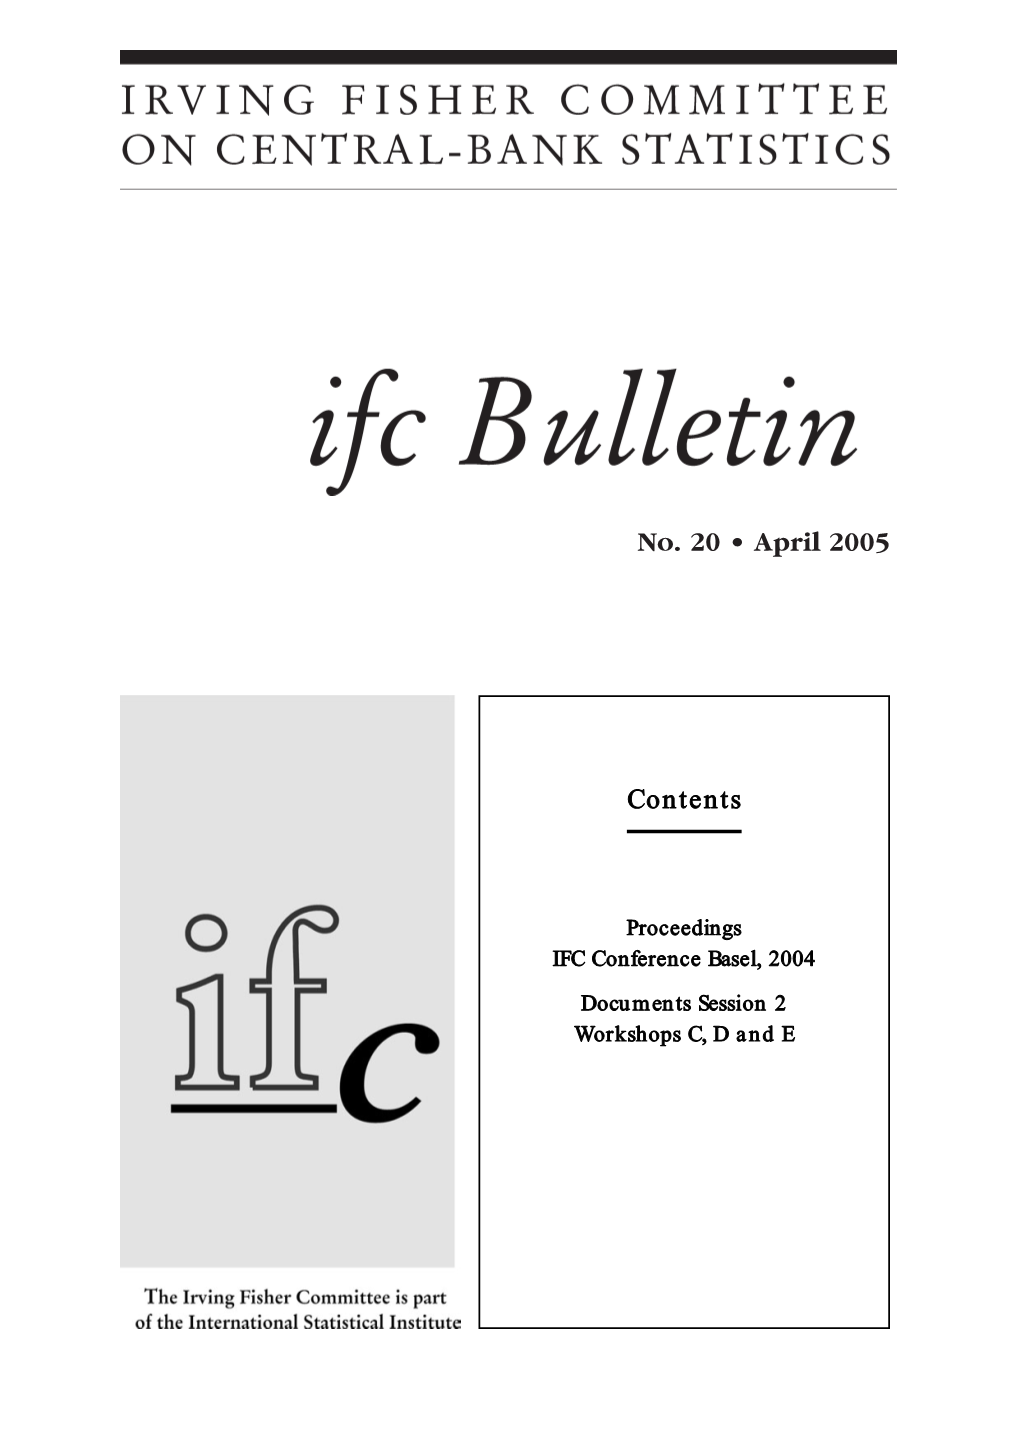 IFC Bulletin No 20, April 2005